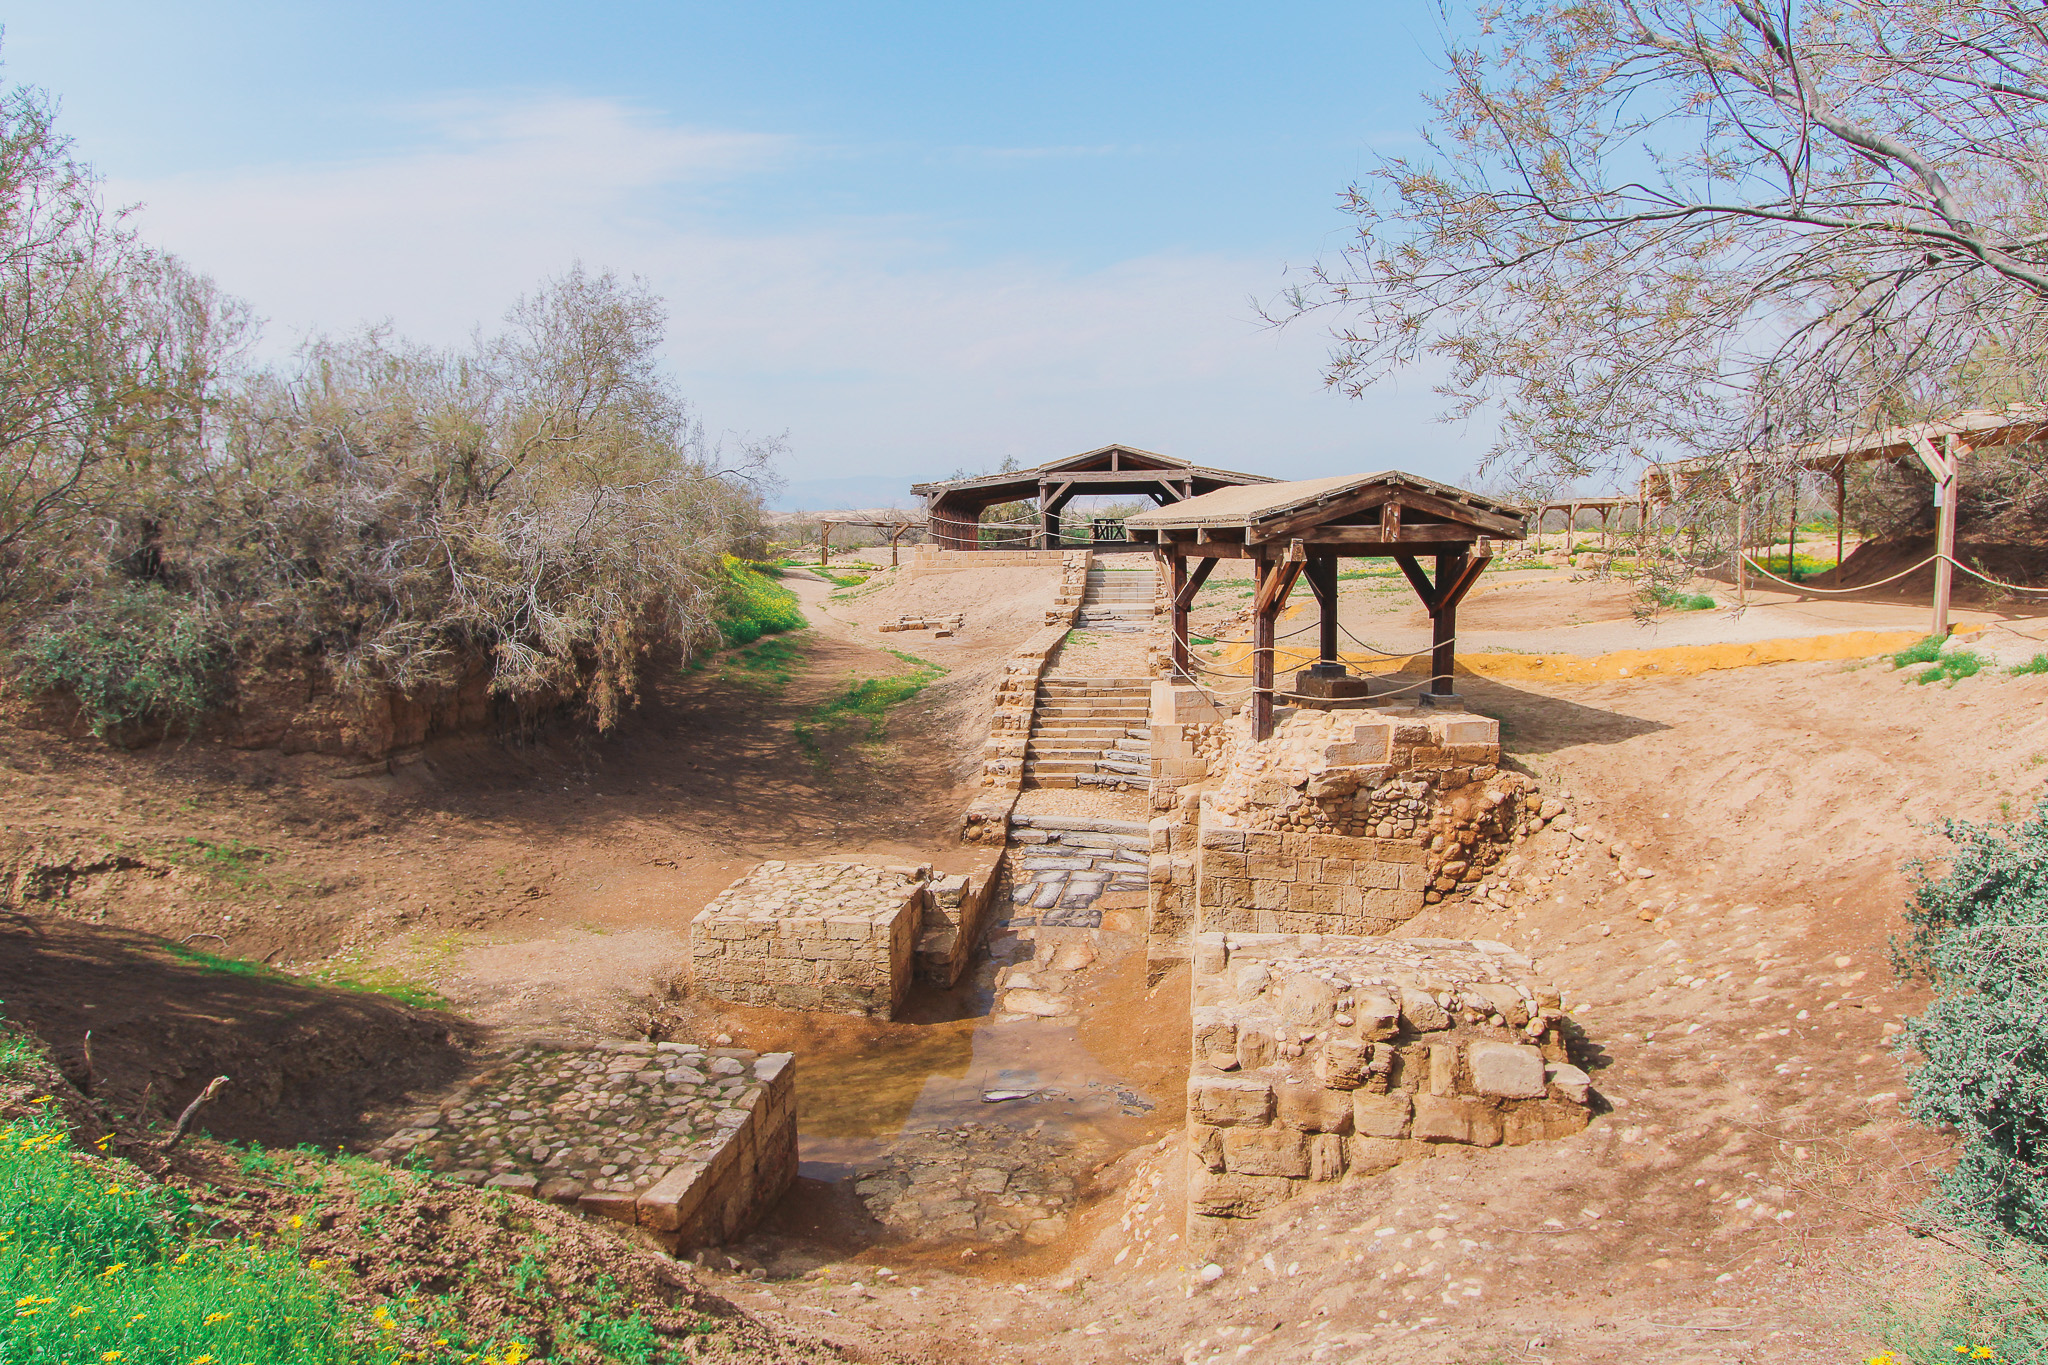 baptism site of jesus christ, jordan